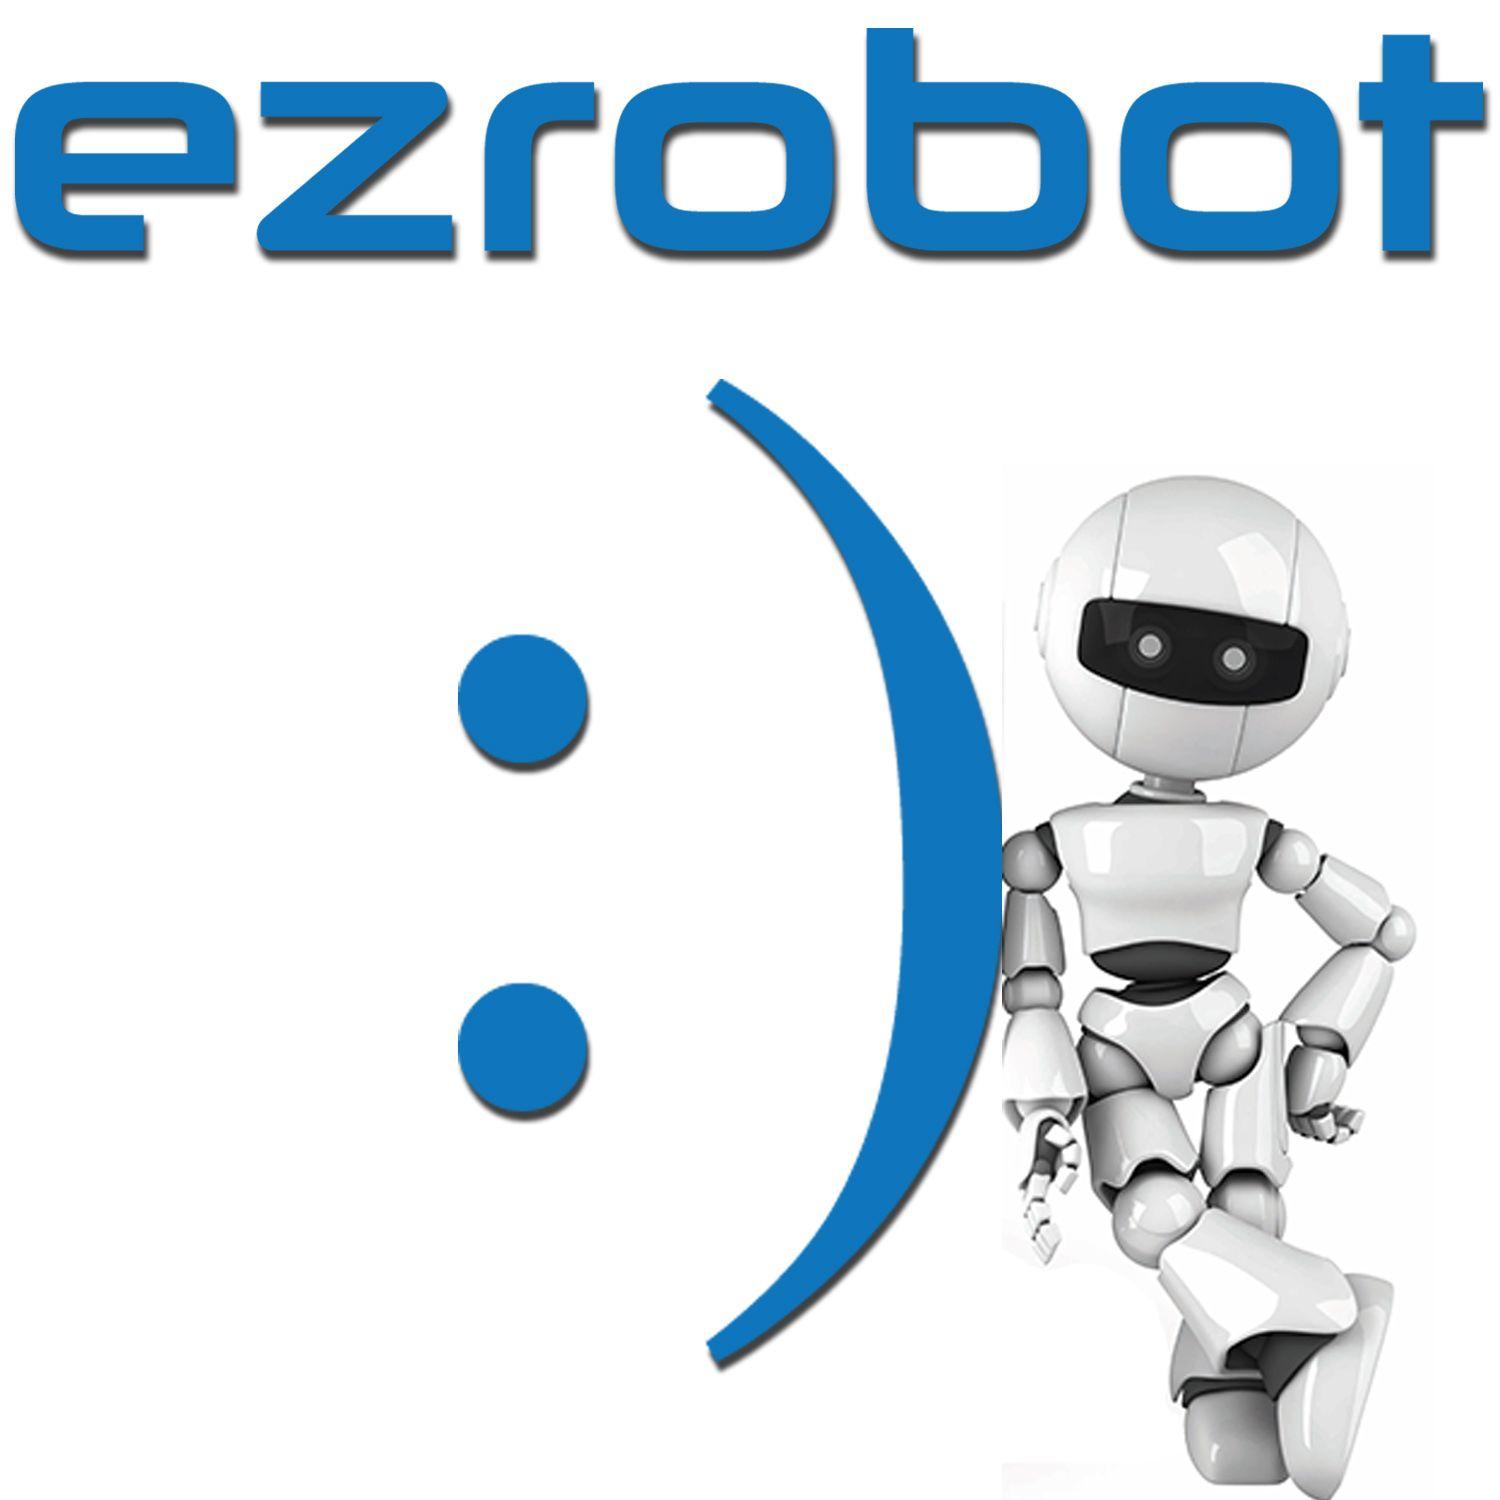 Internet Company Robot Logo - Pictures of Robot Company Logo - kidskunst.info